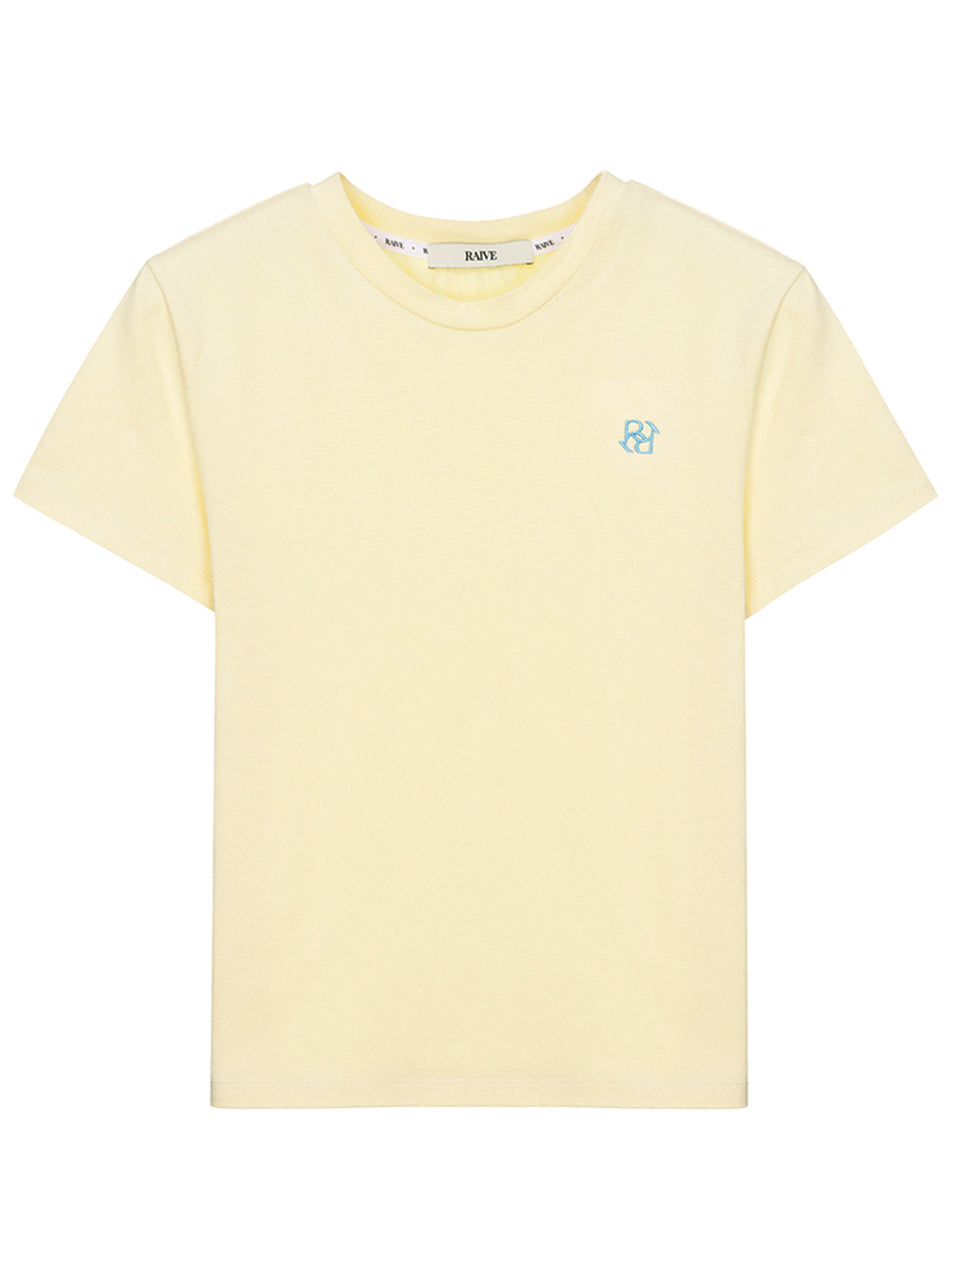 RAIVE Logo Symbol T-shirt in L/Yellow